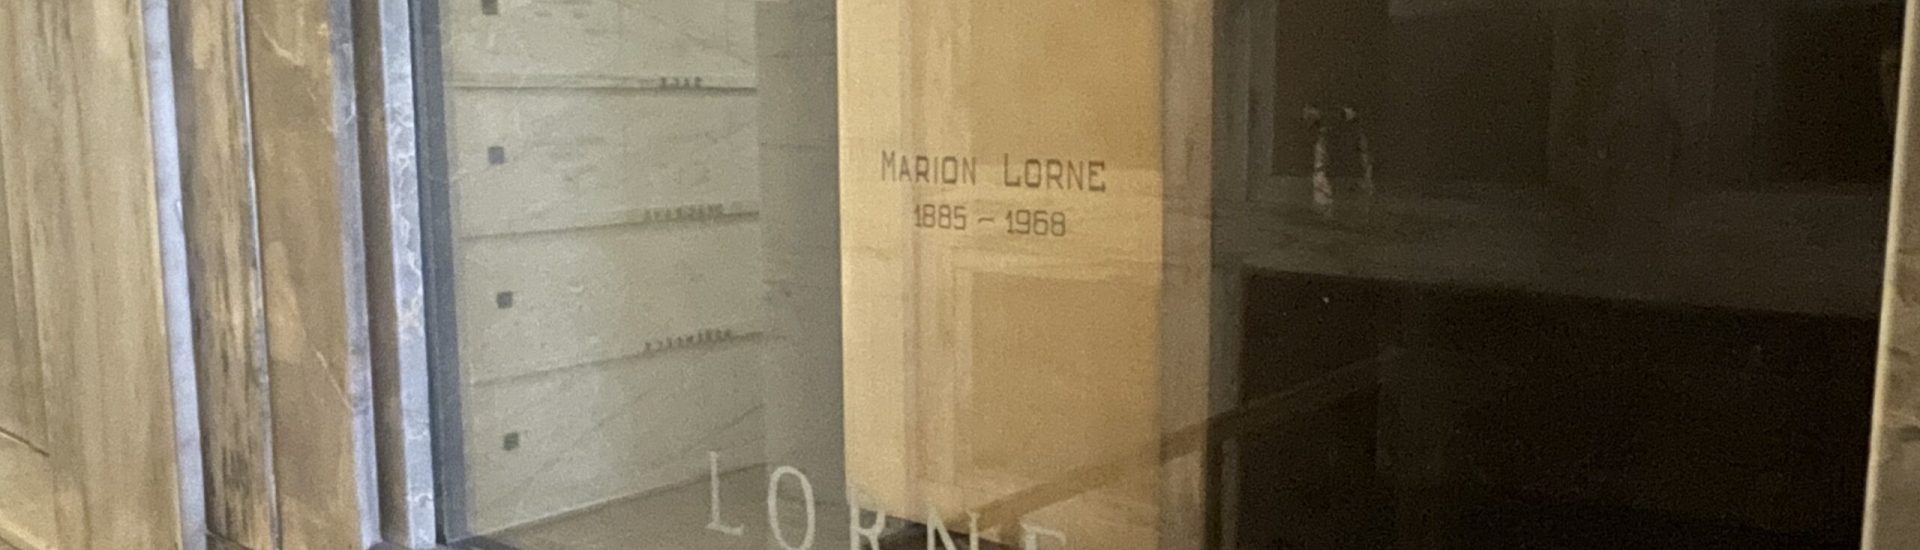 Marion Lorne